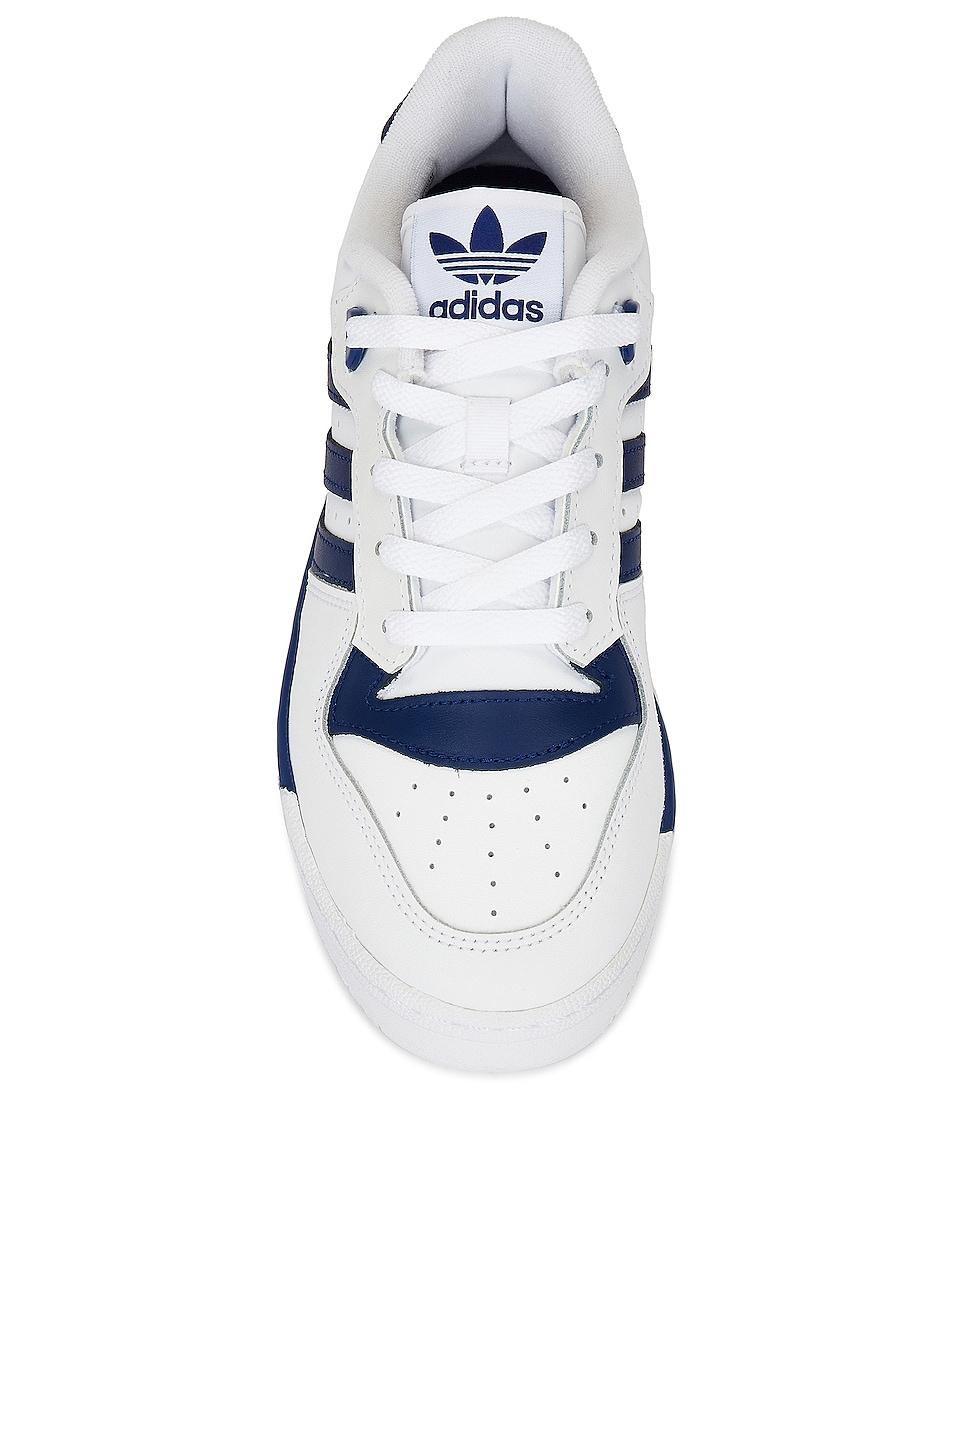 adidas Originals Rivalry Low Sneaker in Blue | Lyst